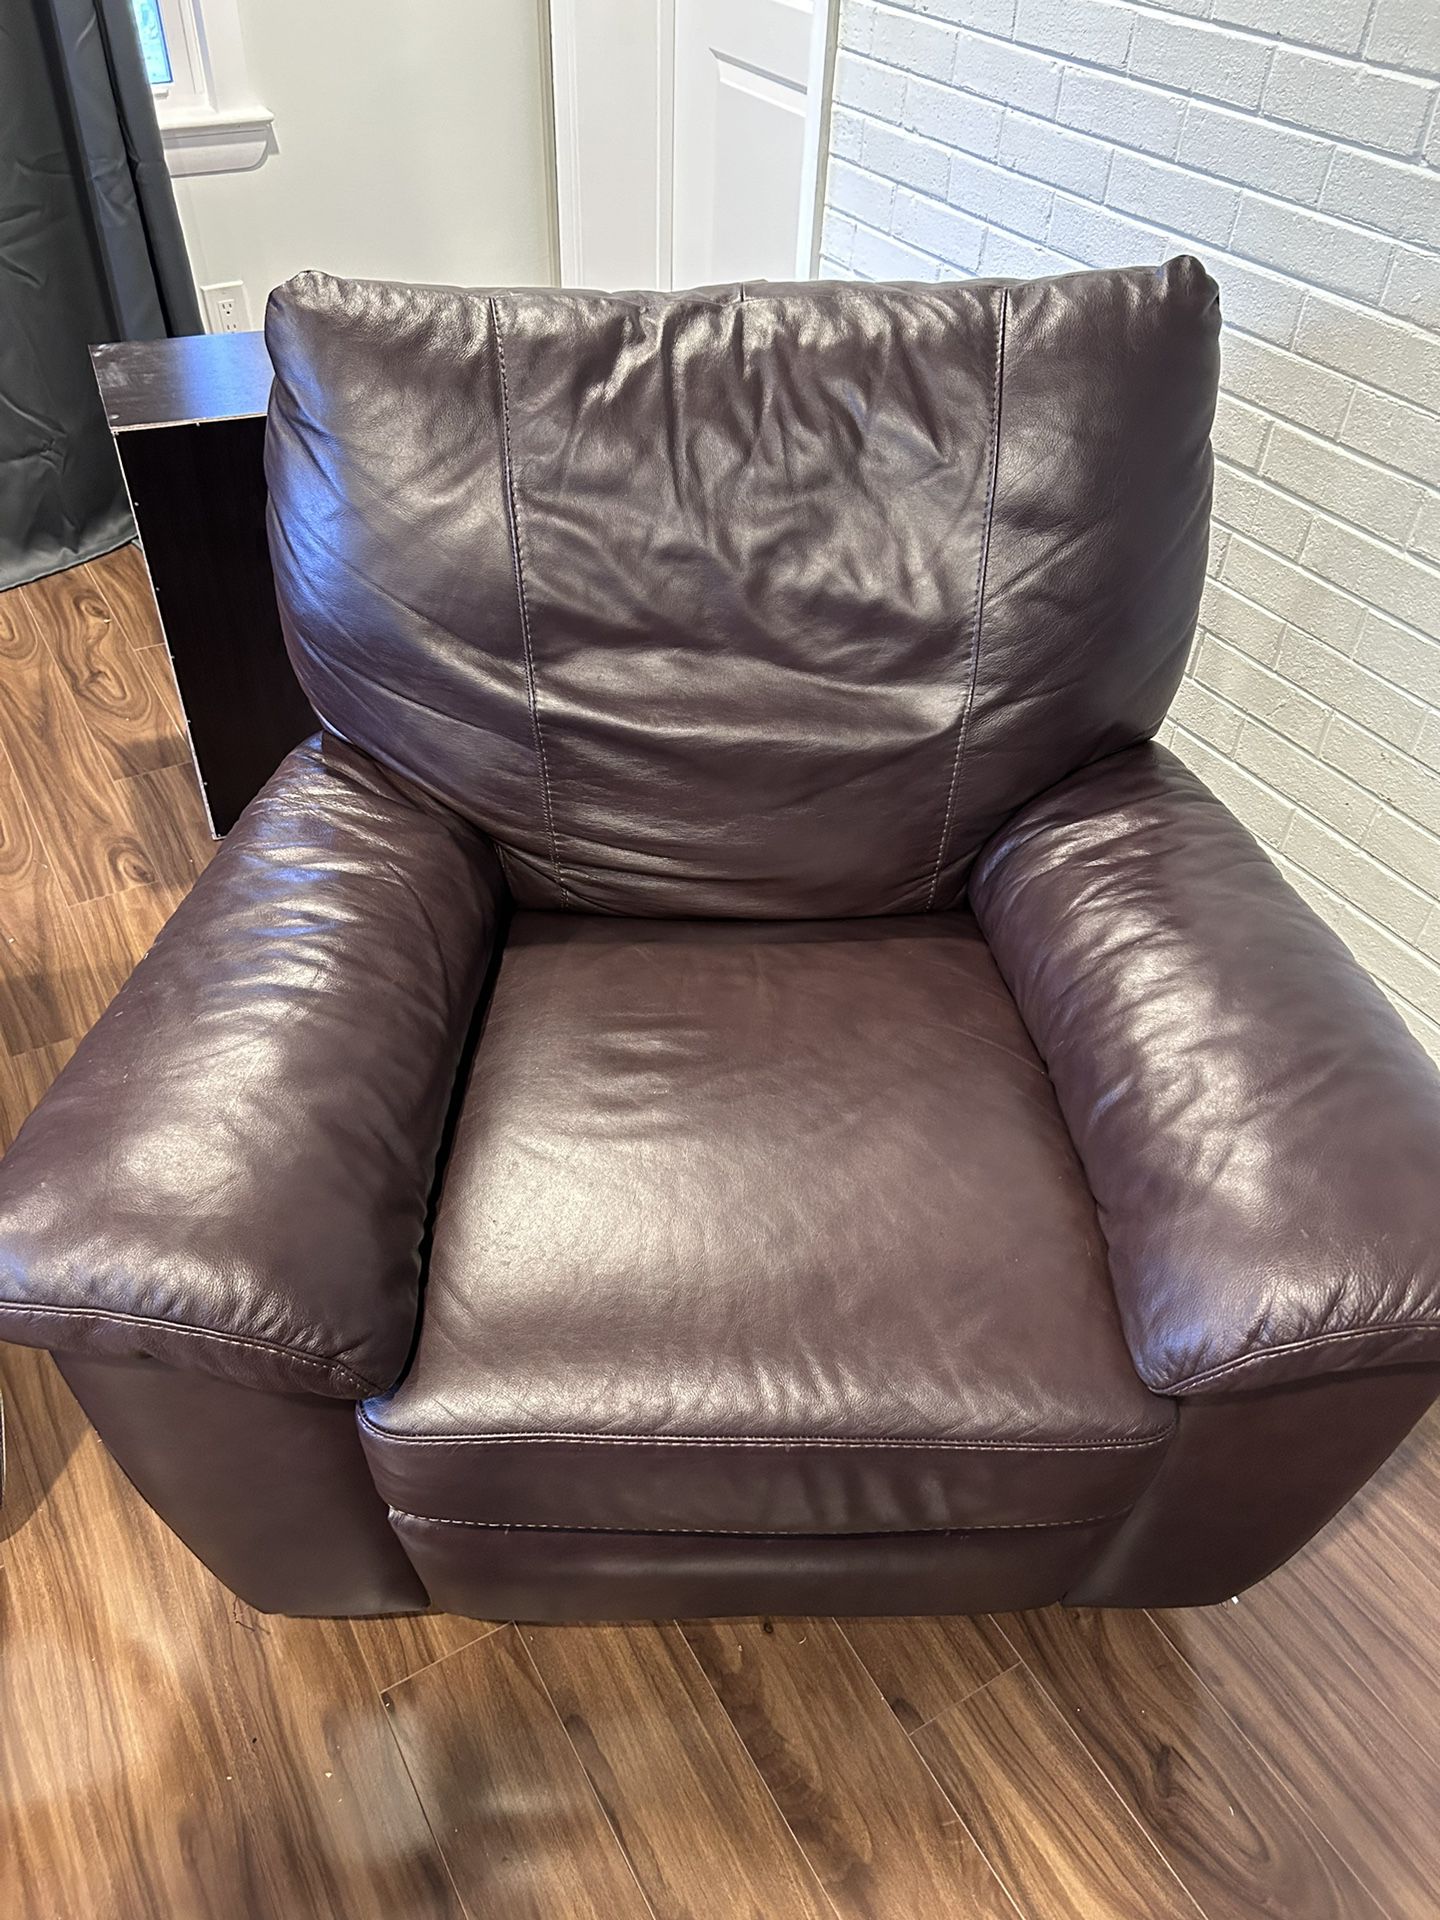 REDUCED: 3 Piece Leather Living Room Set w/ Sleeper-Sofa